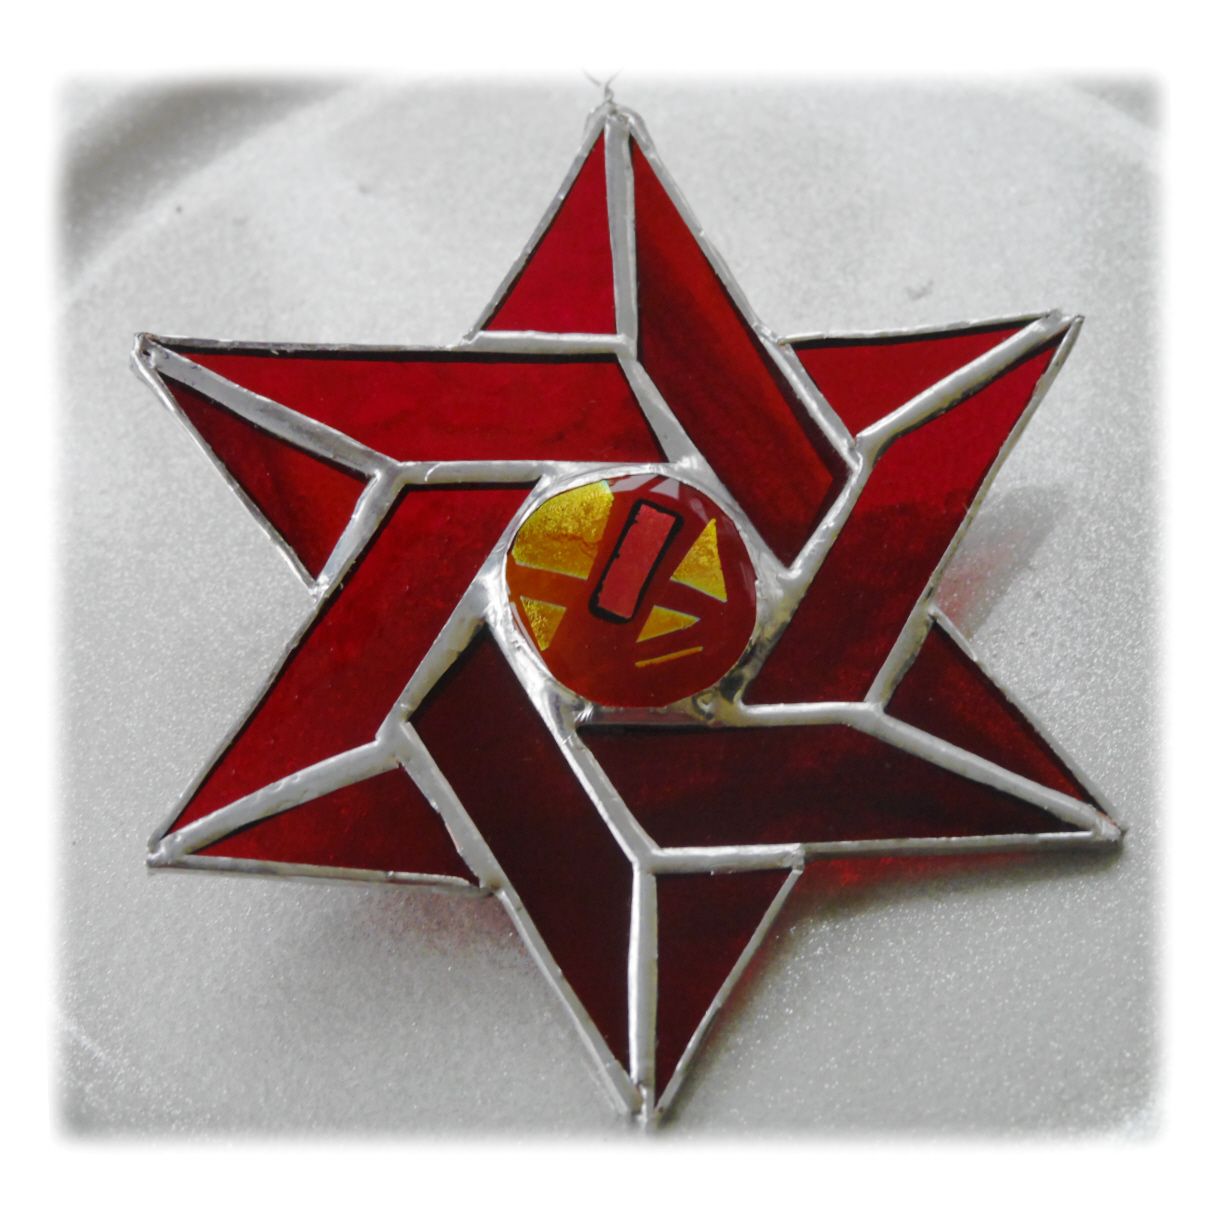 RED Star of David 020 Red #1810 FREE 16.00